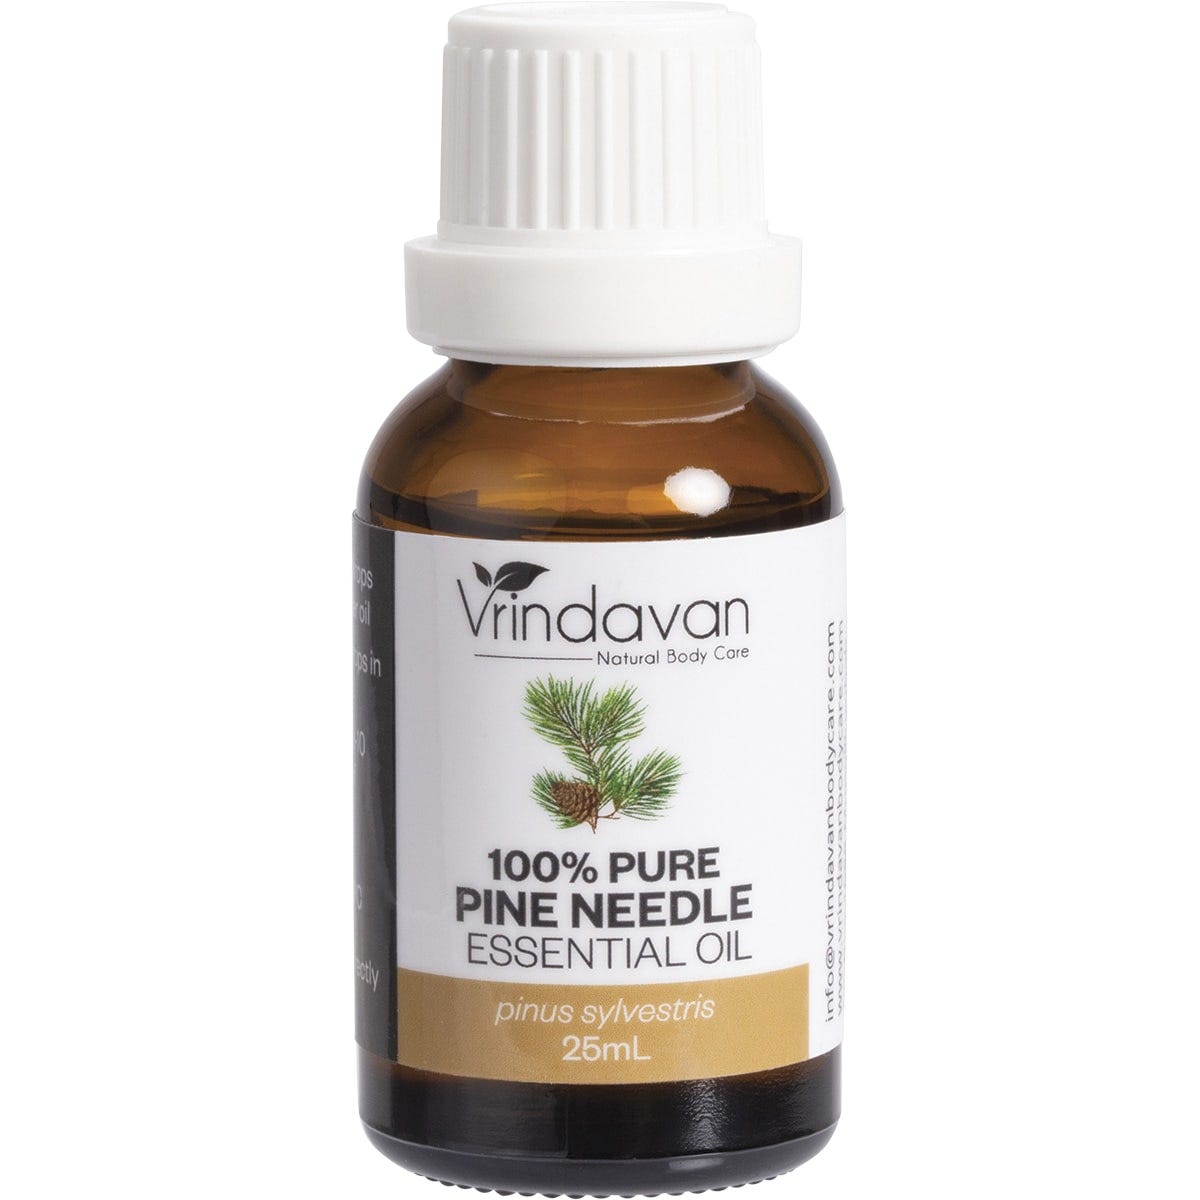 Vrindavan Essential Oil 100% Pine Needle 25ml - Dr Earth - Aromatherapy